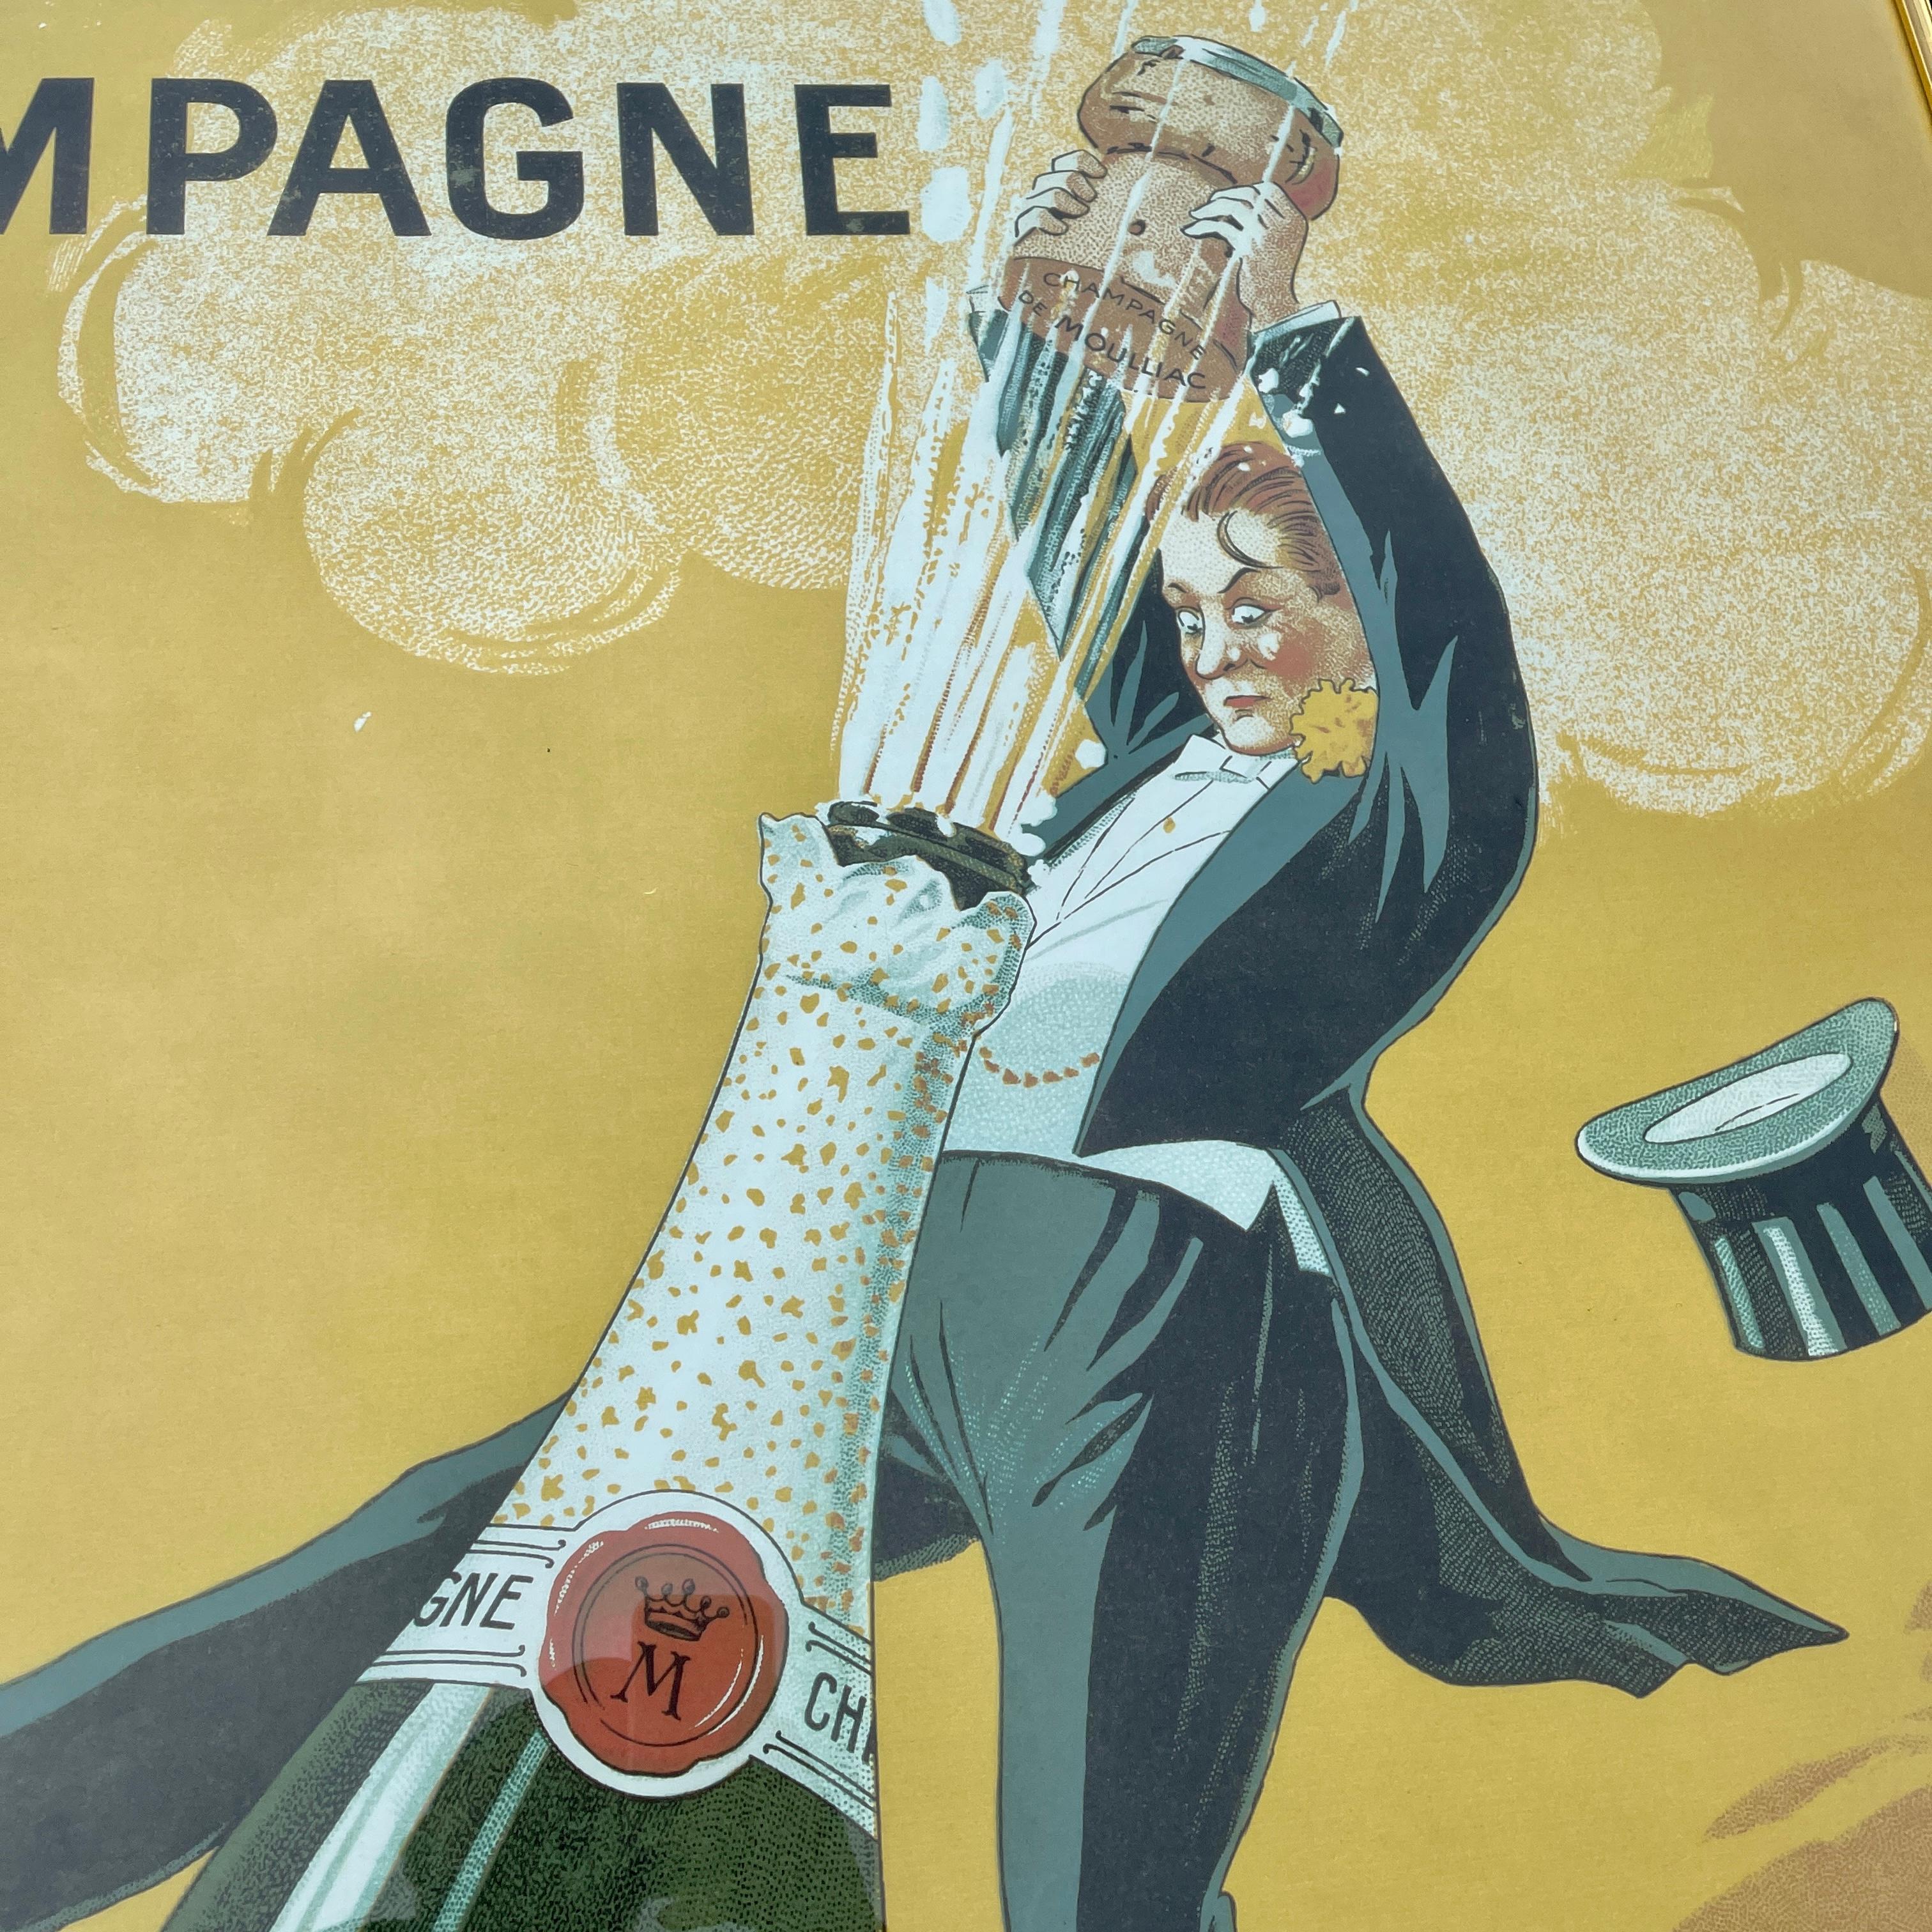 Blackened Large Framed Poster For Champagne Vicomte de Moulliac